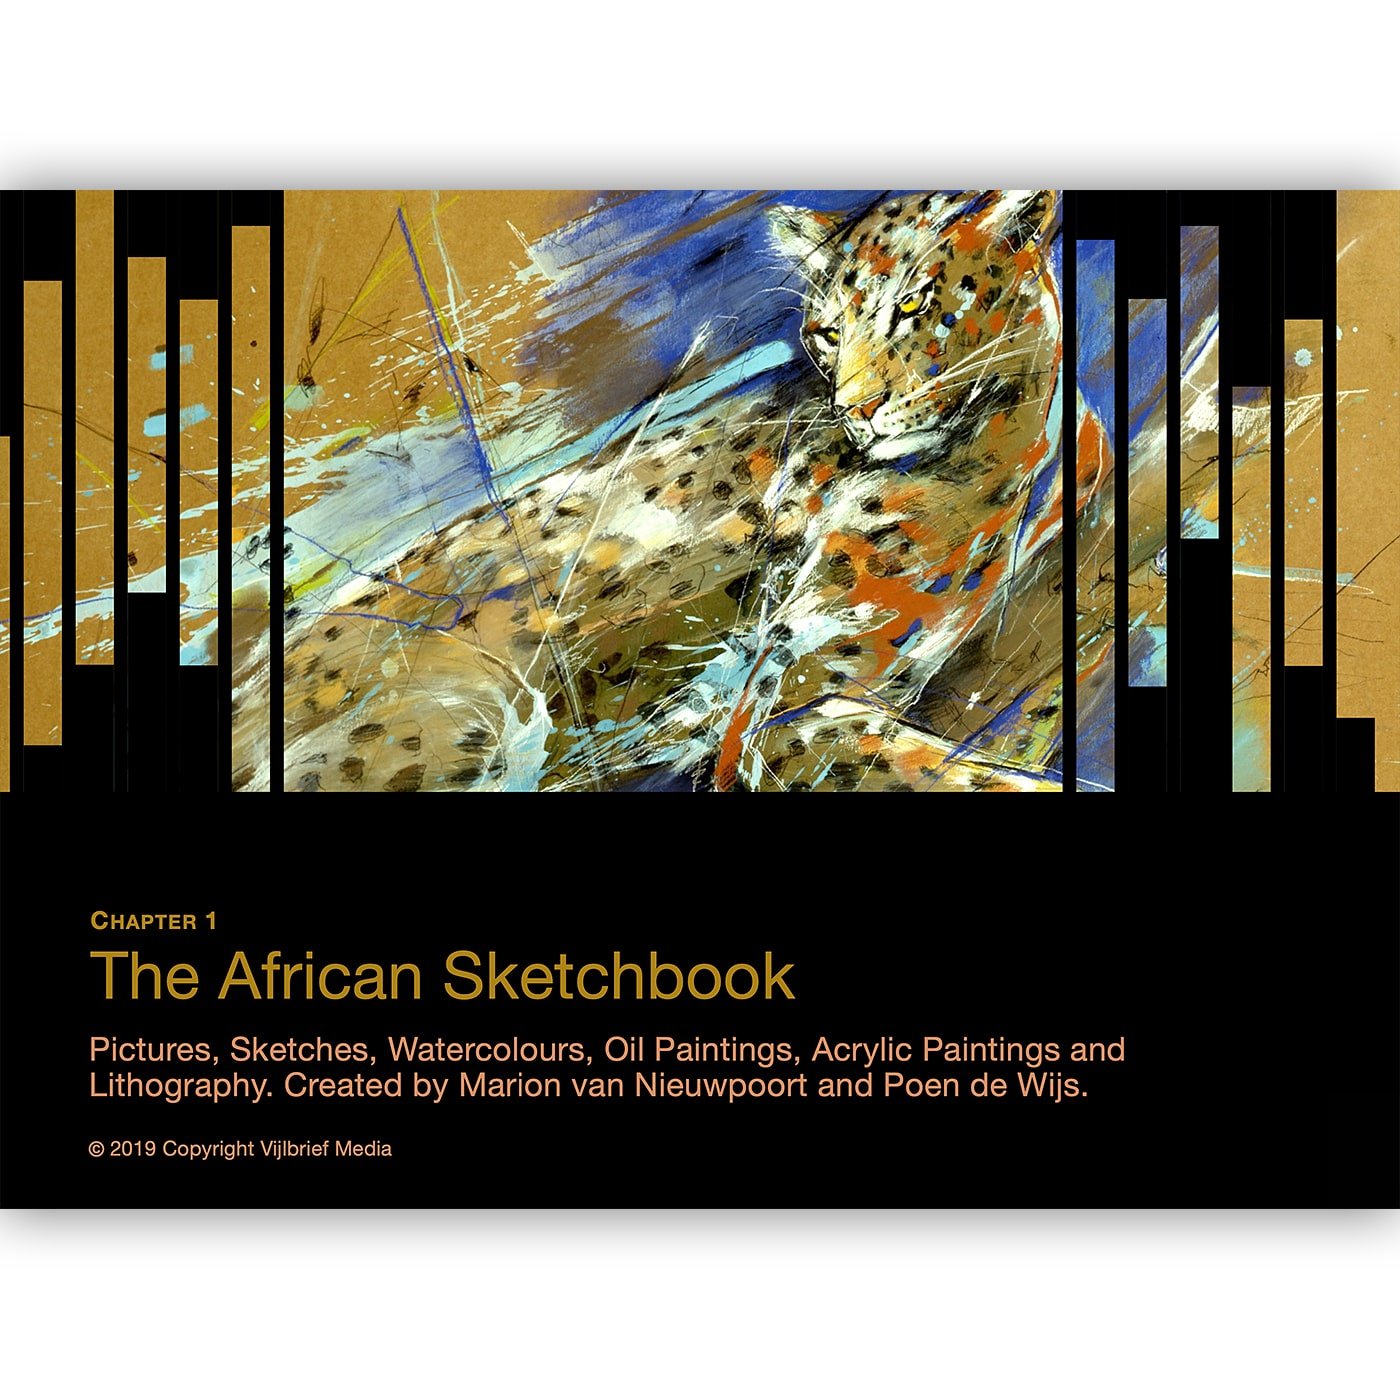 AfricanSketchbook02_JohnVijlbrief-min.jpg